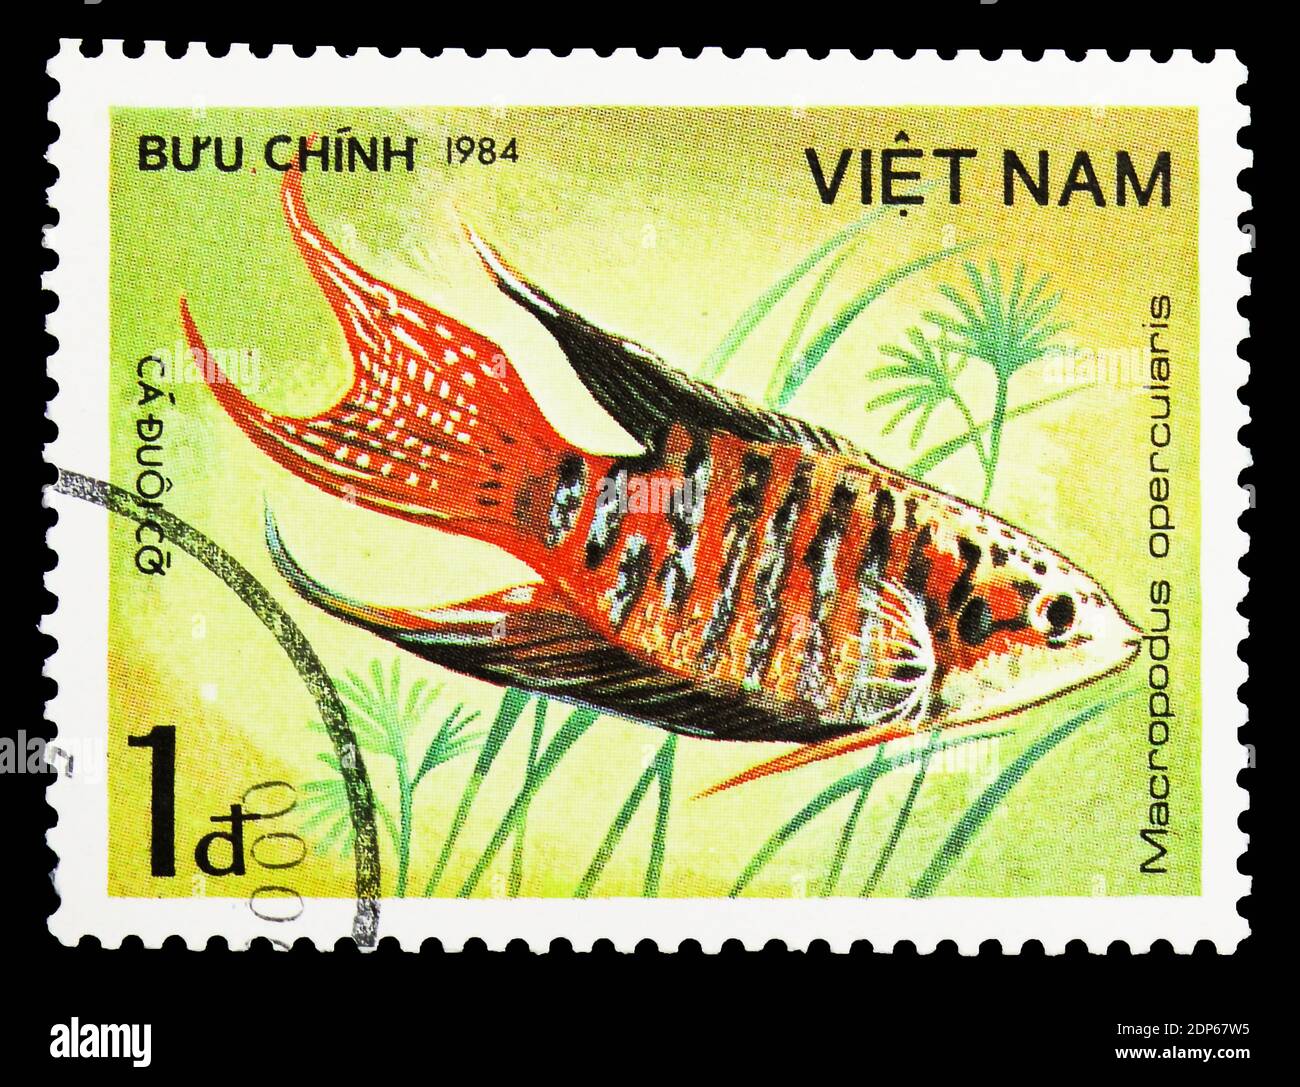 MOSCOW, RUSSIA - SEPTEMBER 26, 2018: A stamp printed in Vietnam shows Paradise Gourami (Macropodus opercularis), Fish - Ornamental serie, circa 1984 Stock Photo